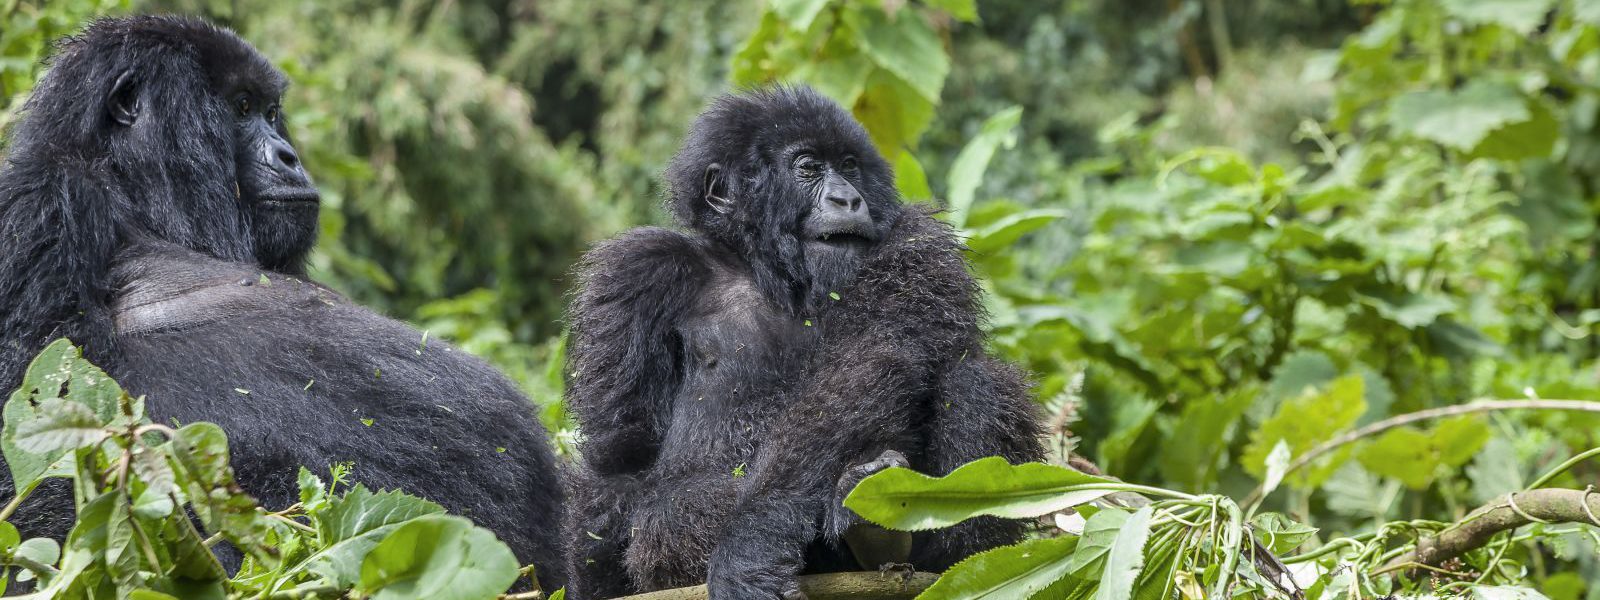 5 Days Uganda Gorillas & Chimps from Kigali